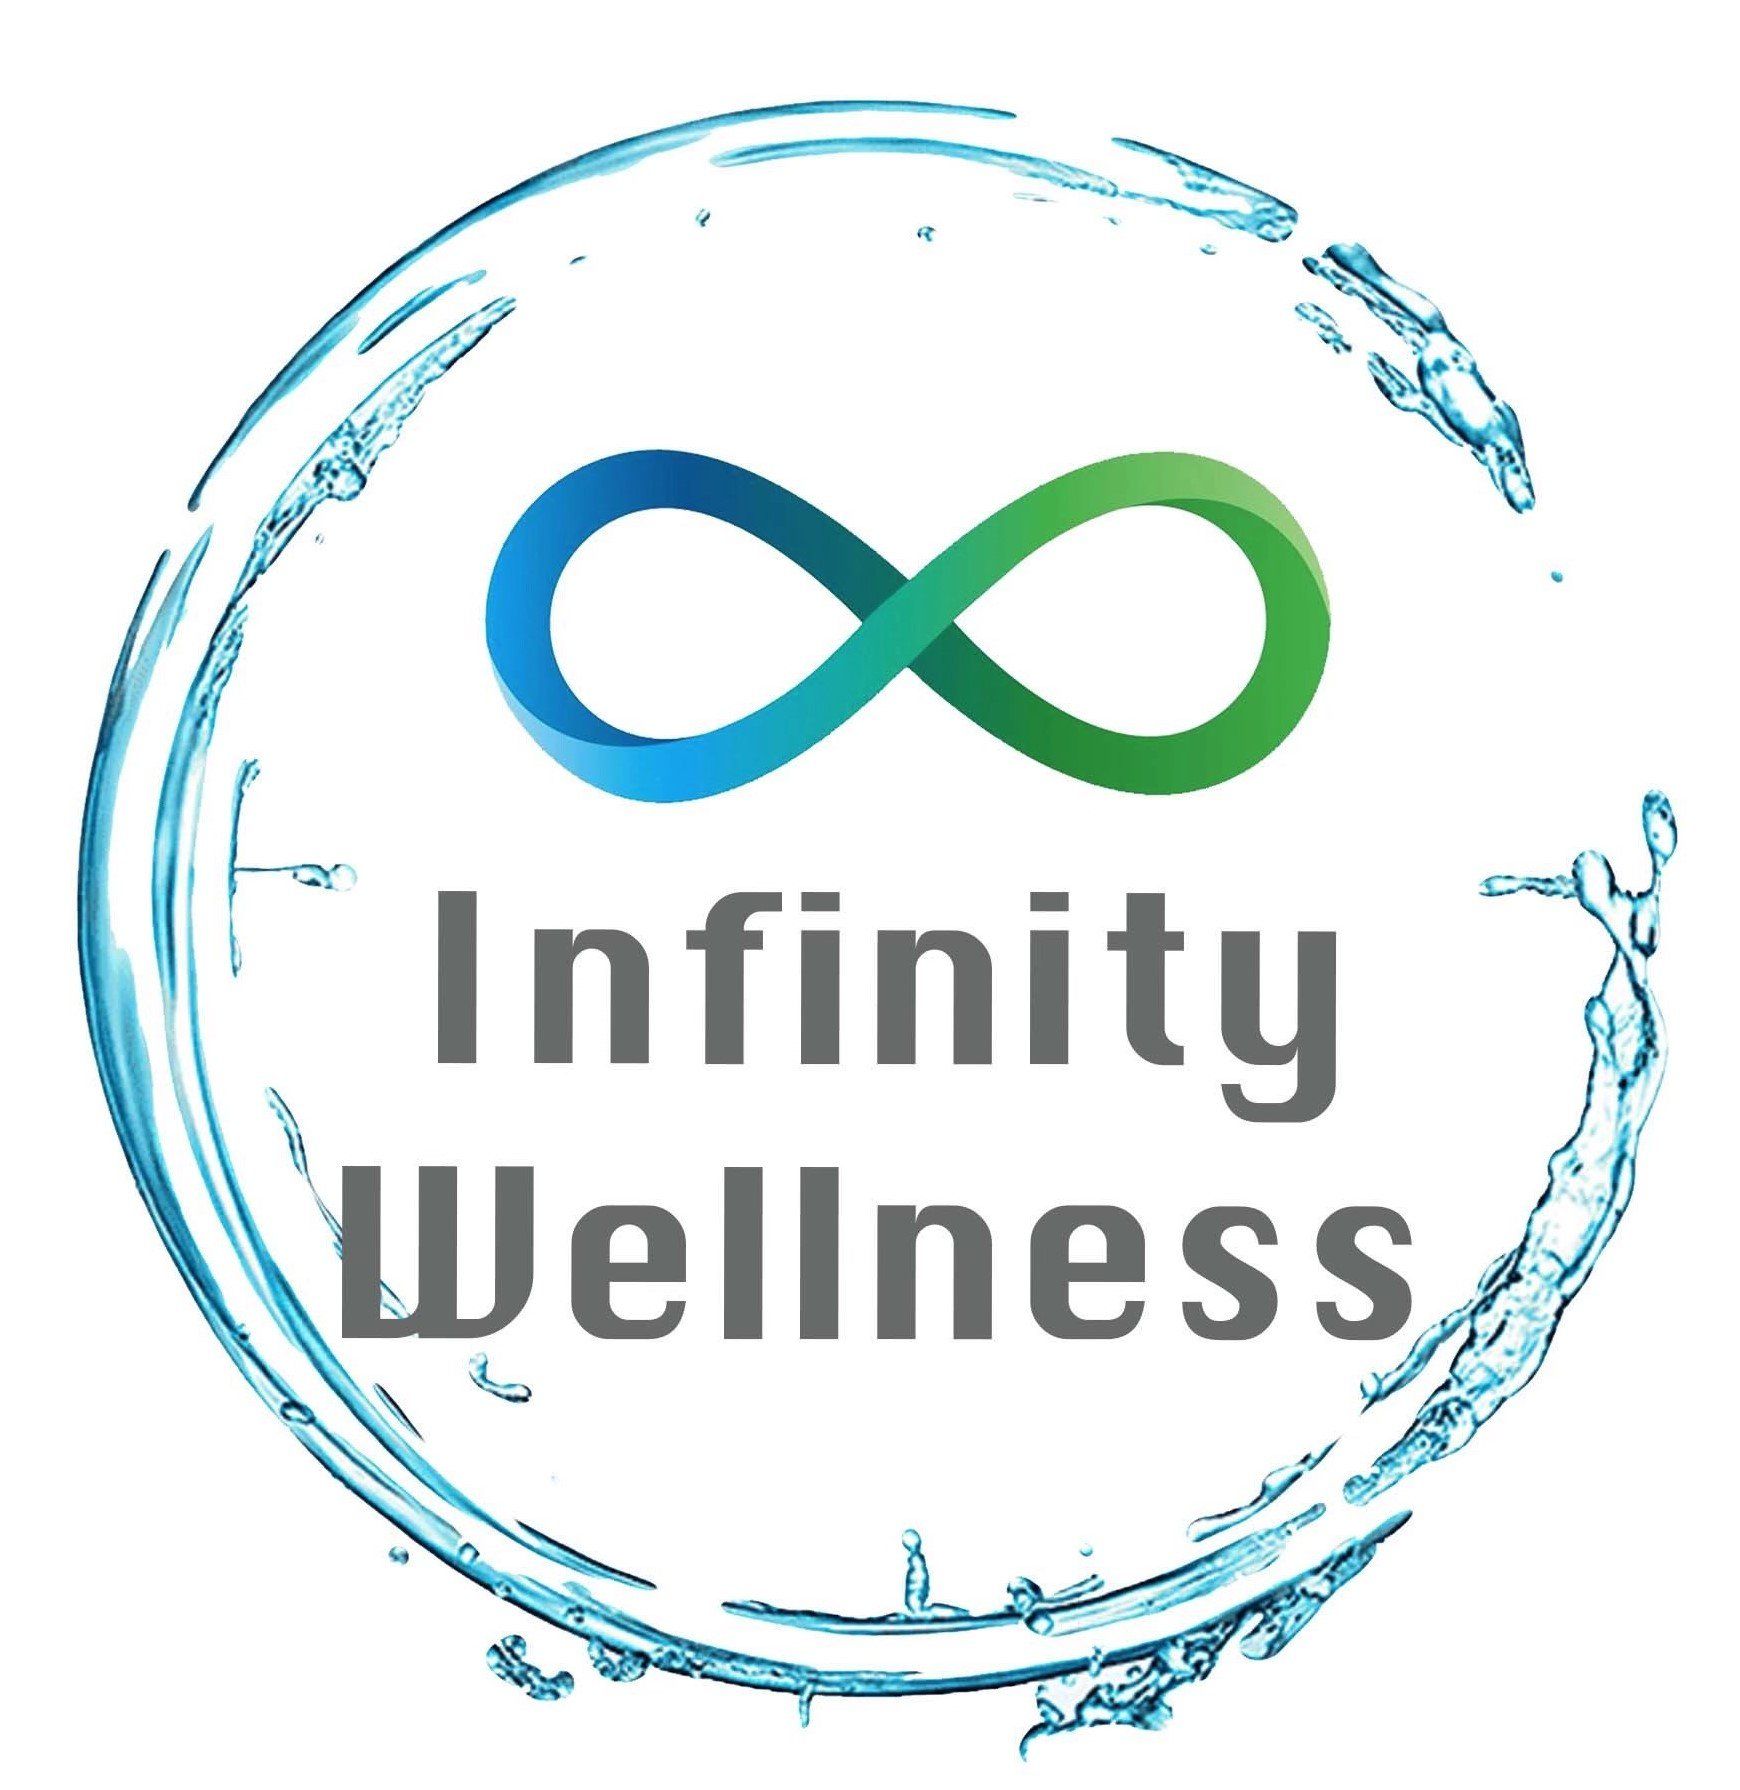 infinity wellness logo